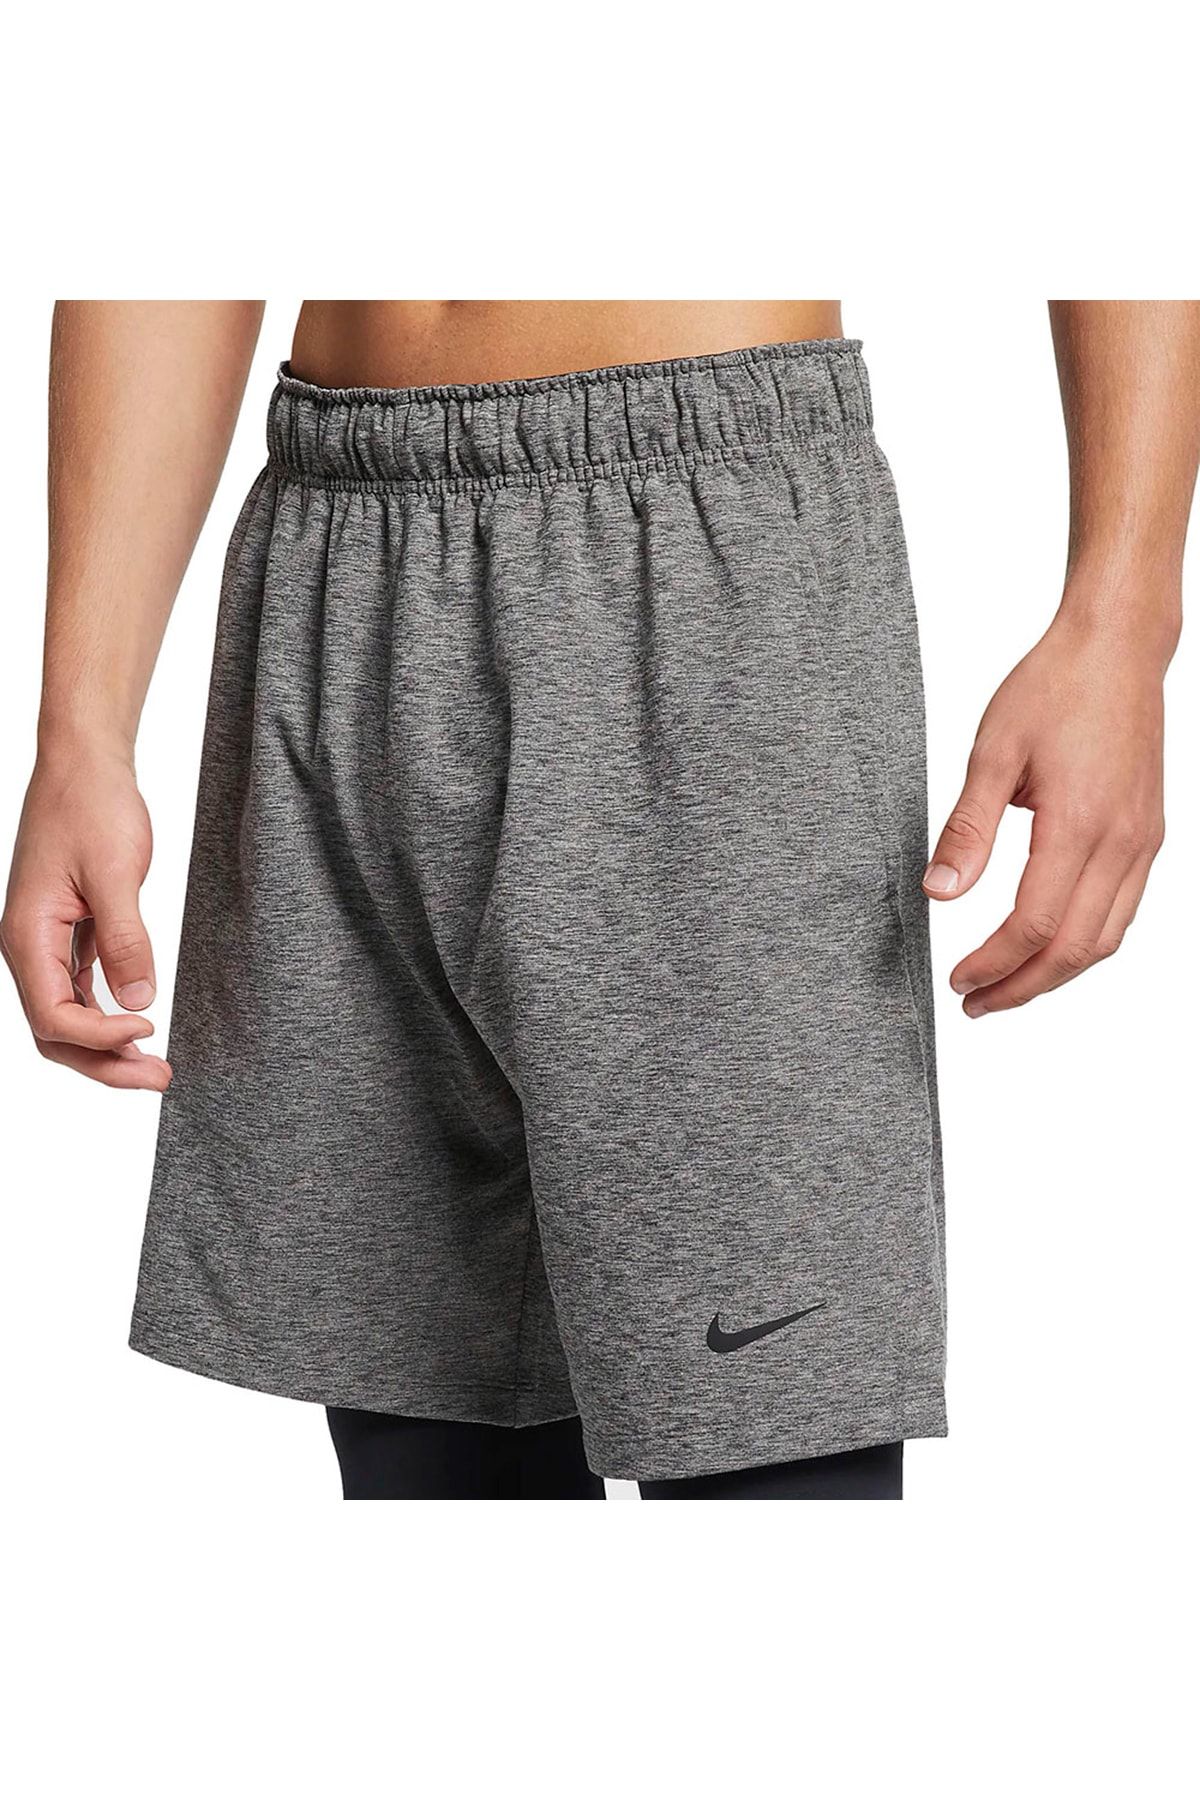 Шорты nike dri fit. Nike Training Dry шорты. Шорты Nike Dri Fit мужские. Шорты мужские Nike Yoga.